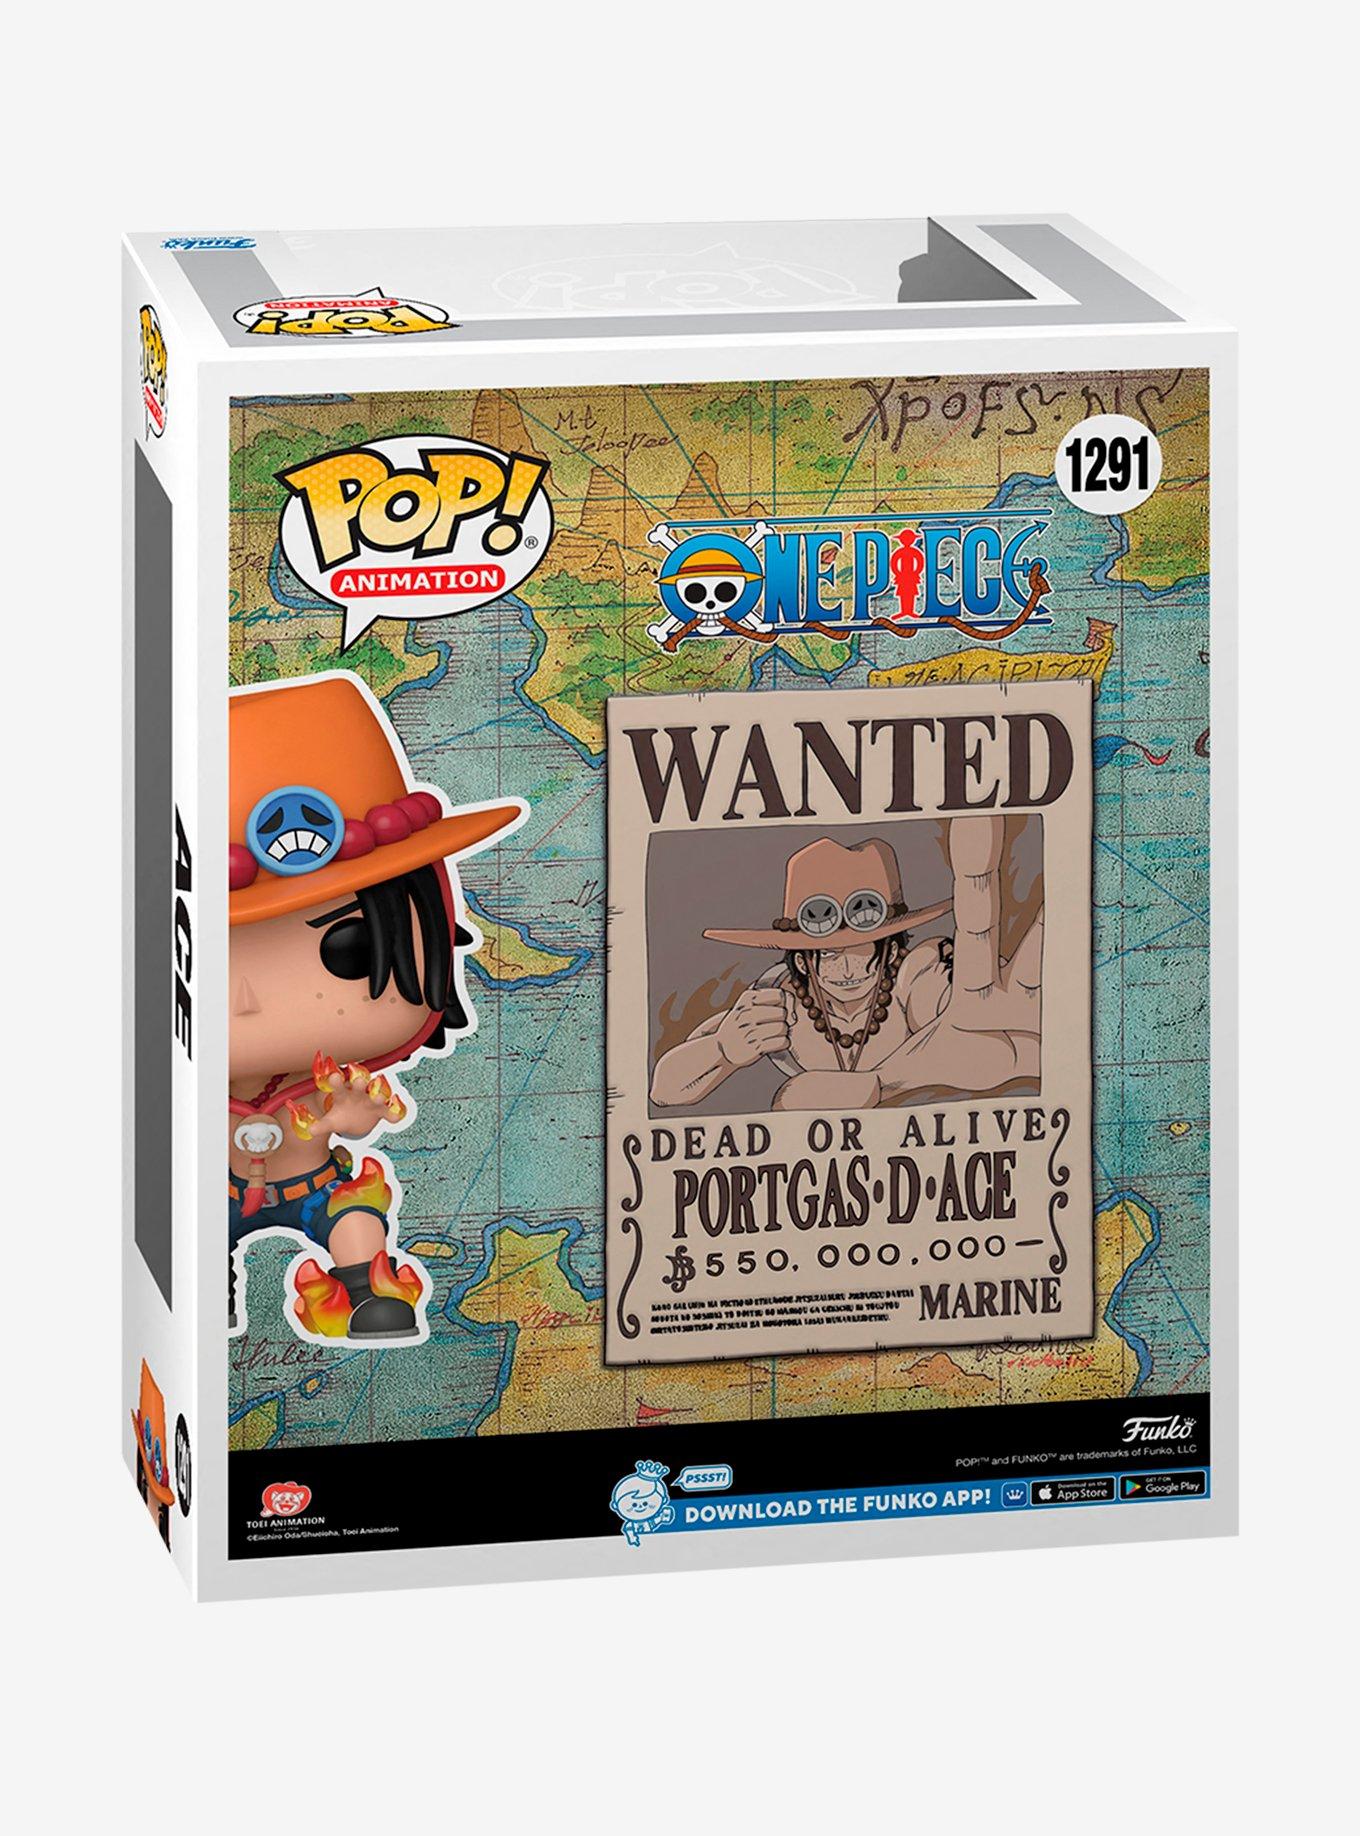 Portgas D. Ace #100 Funko Pop! Animation One Piece — Pop Hunt Thrills